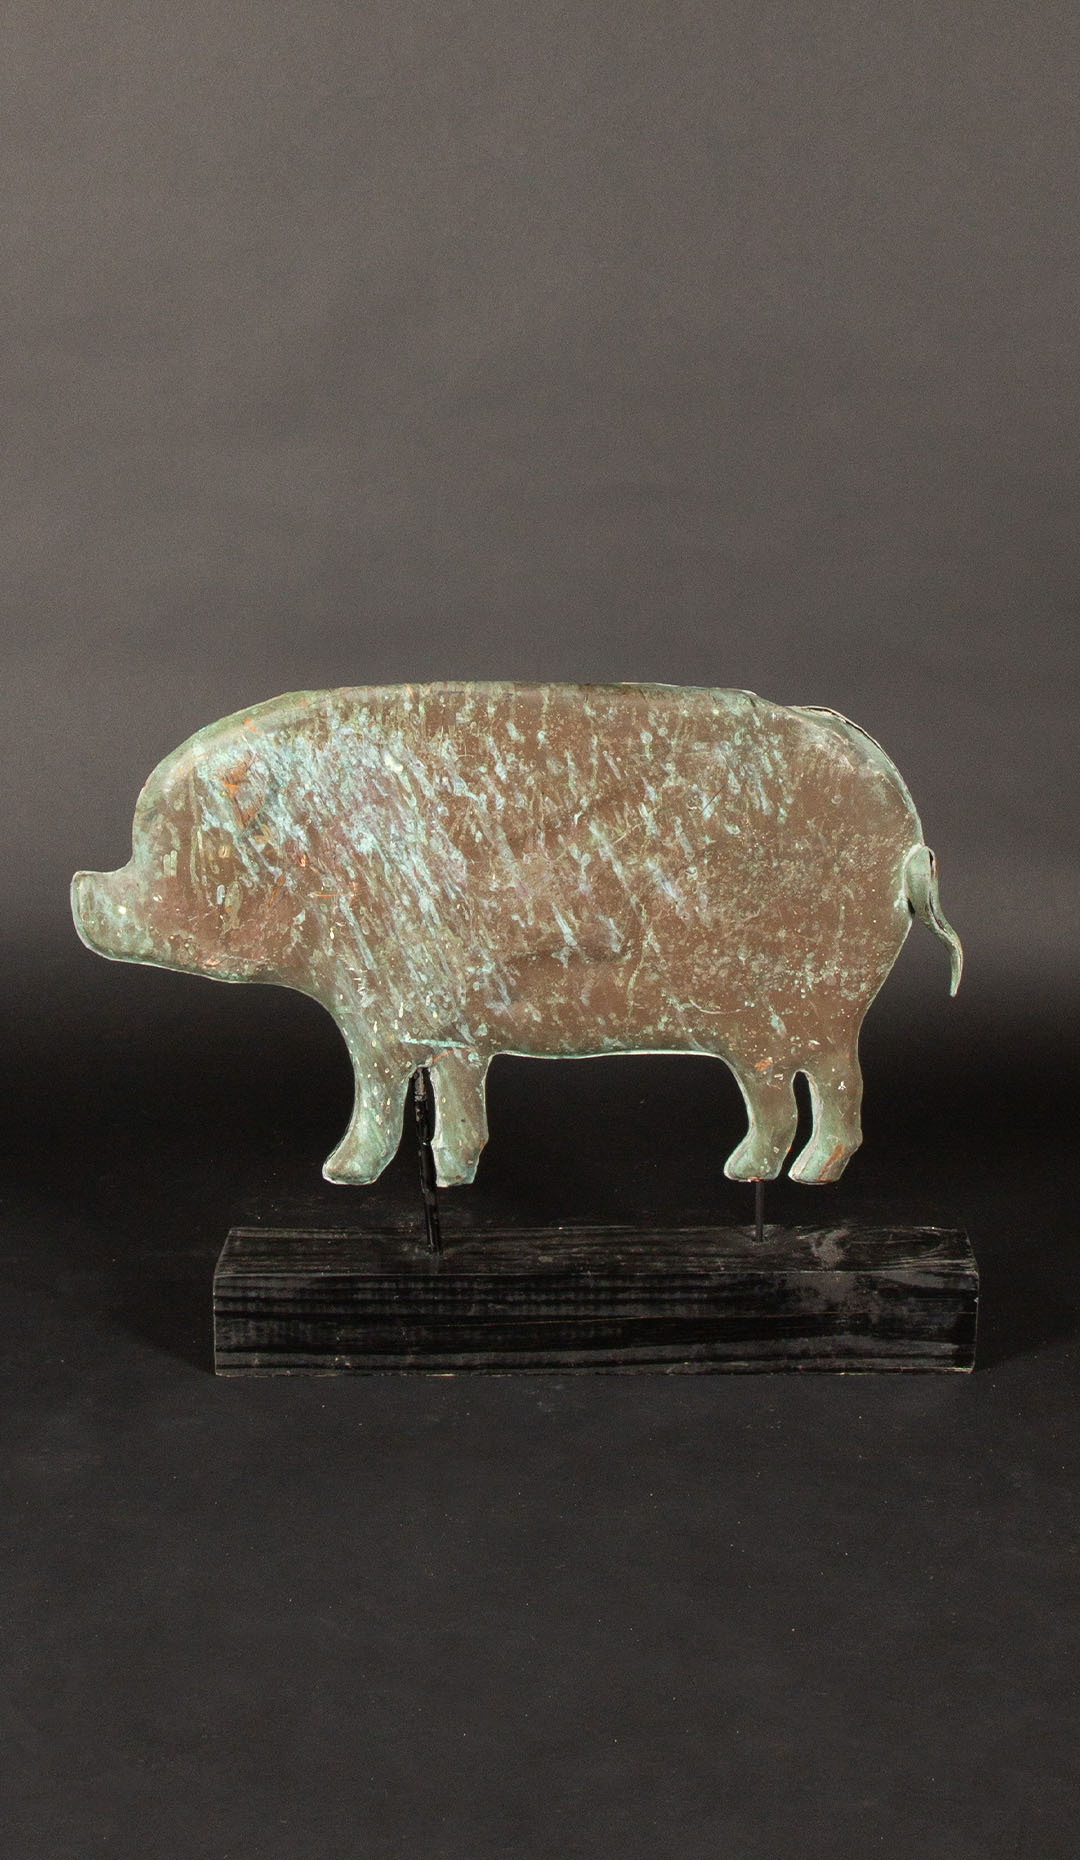 Copper Pig Weathervane